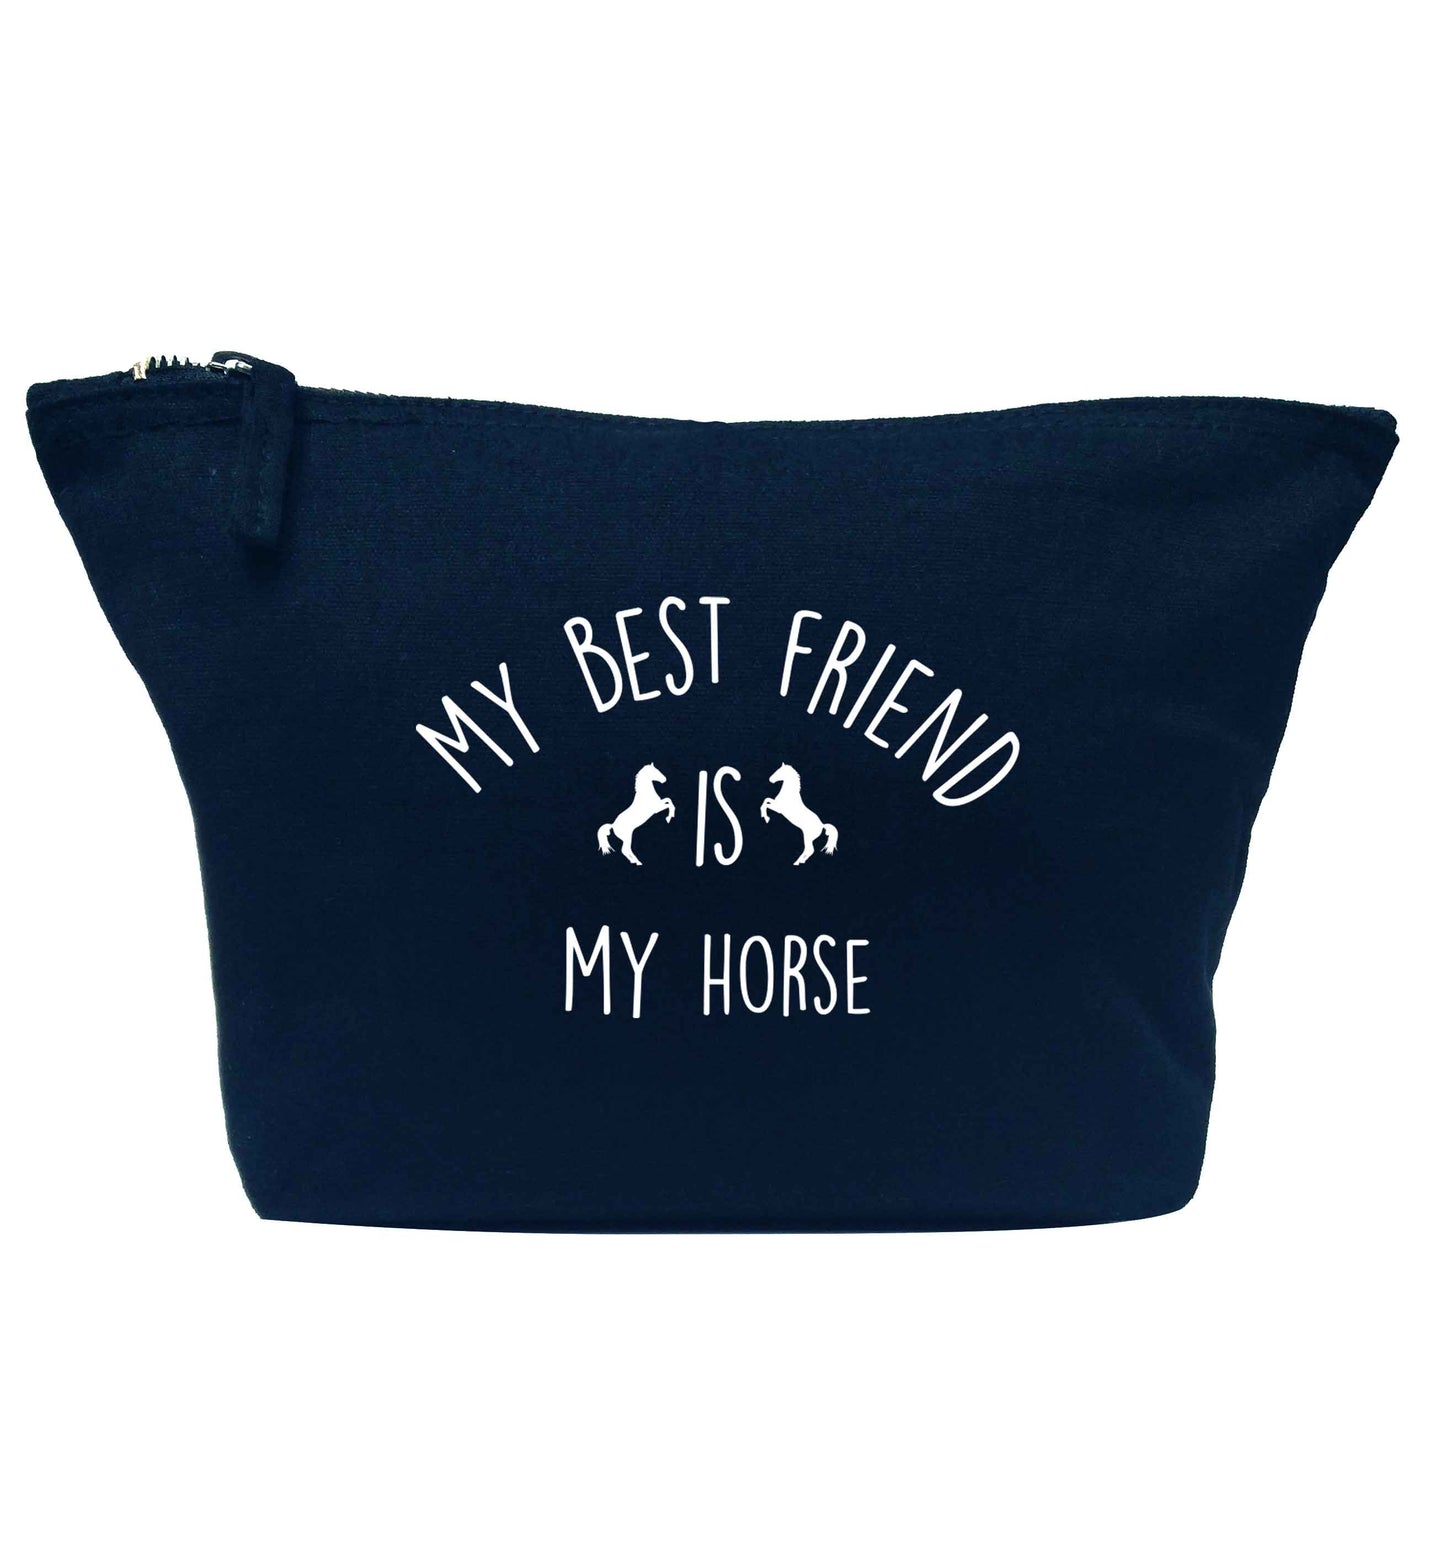 My best friend is my horse navy makeup bag